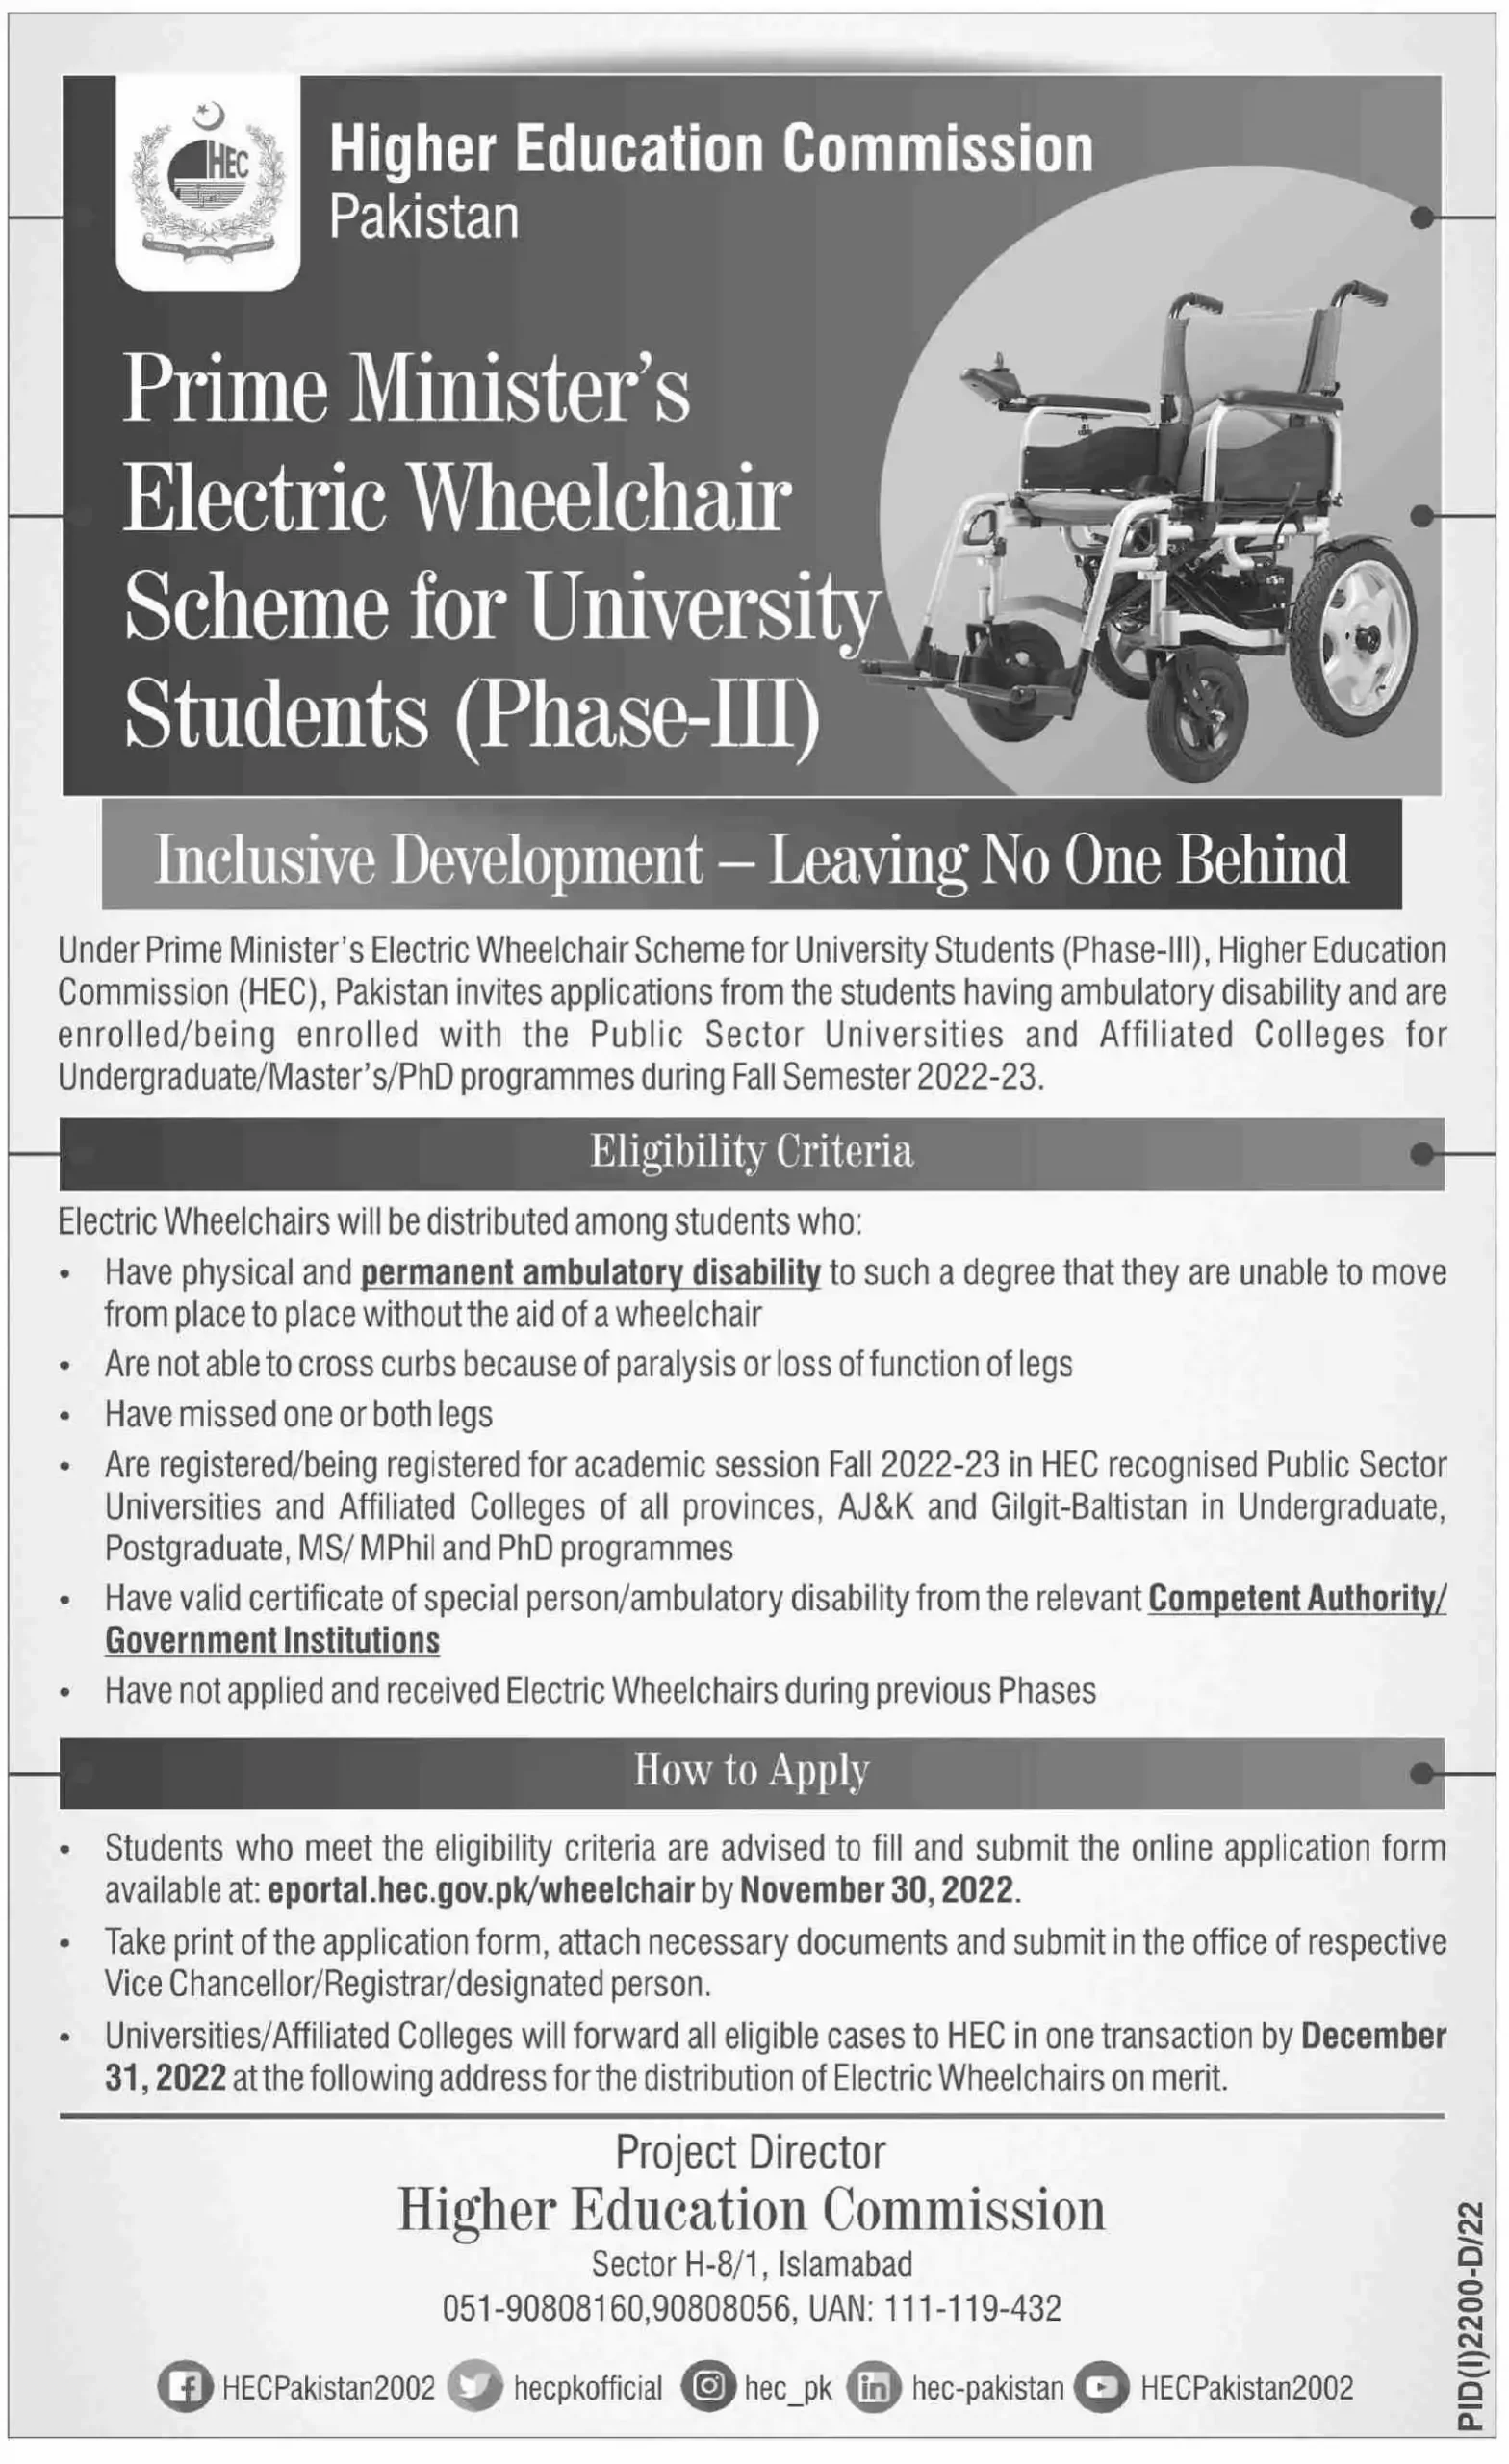 PM Electric Wheelchair Scheme 2022-23 ePortal.Hec.Gov.Pk